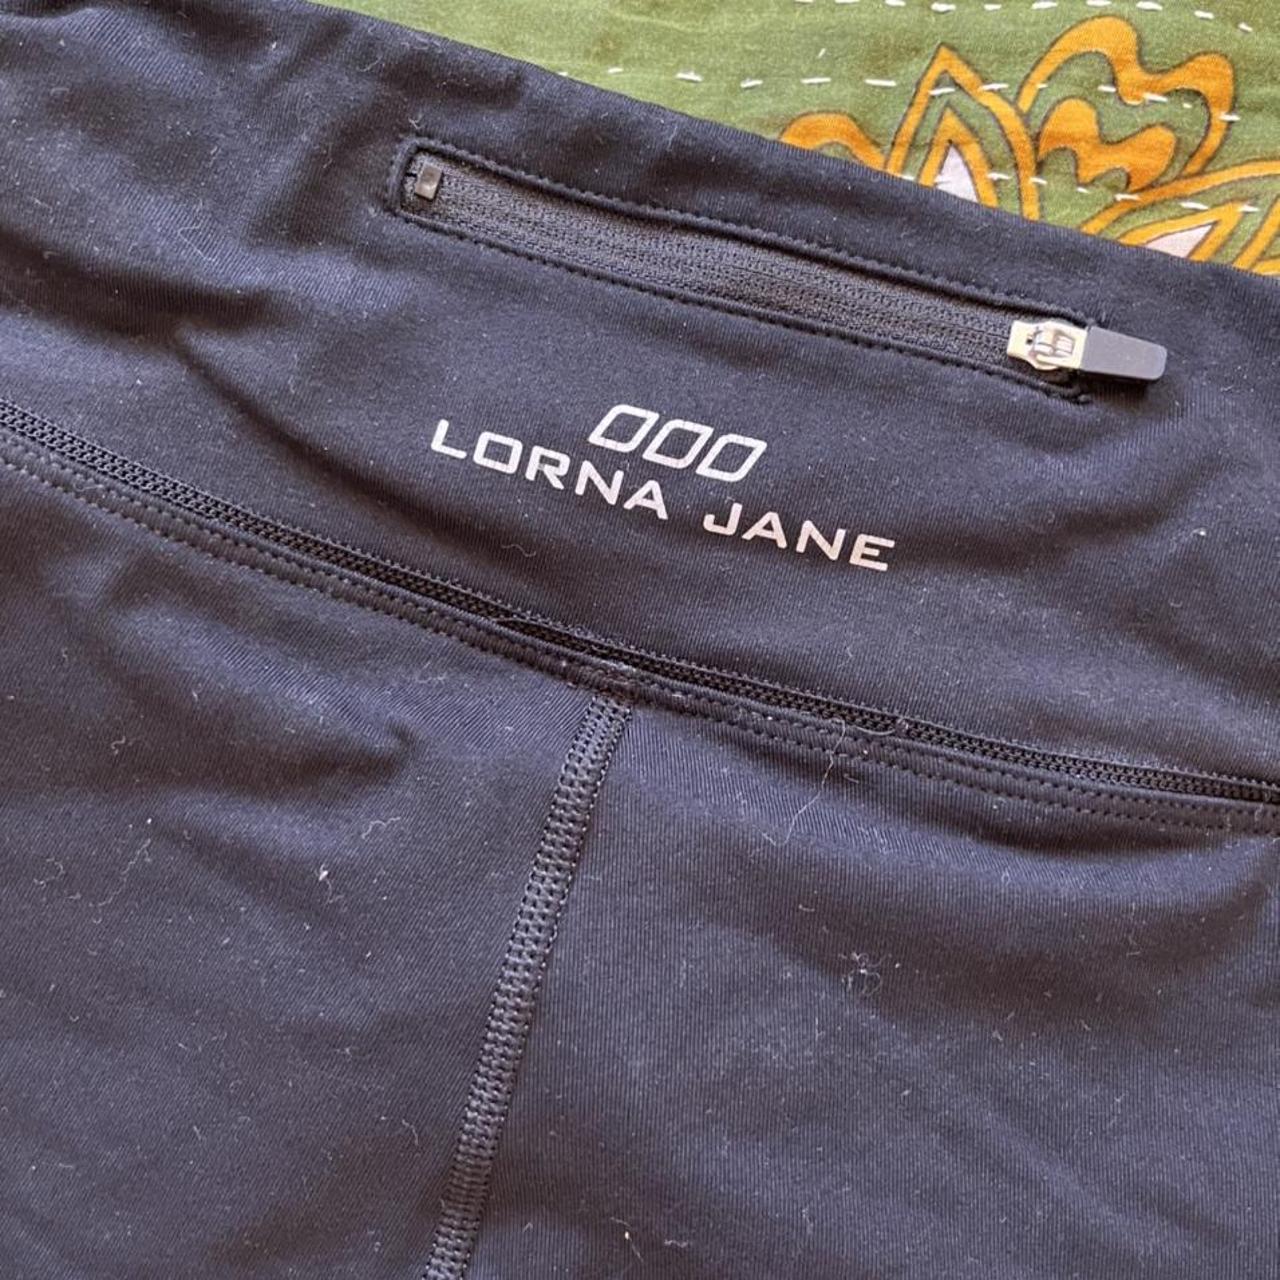 Lorna Jane gym shorts size M but more like a S I’d... - Depop